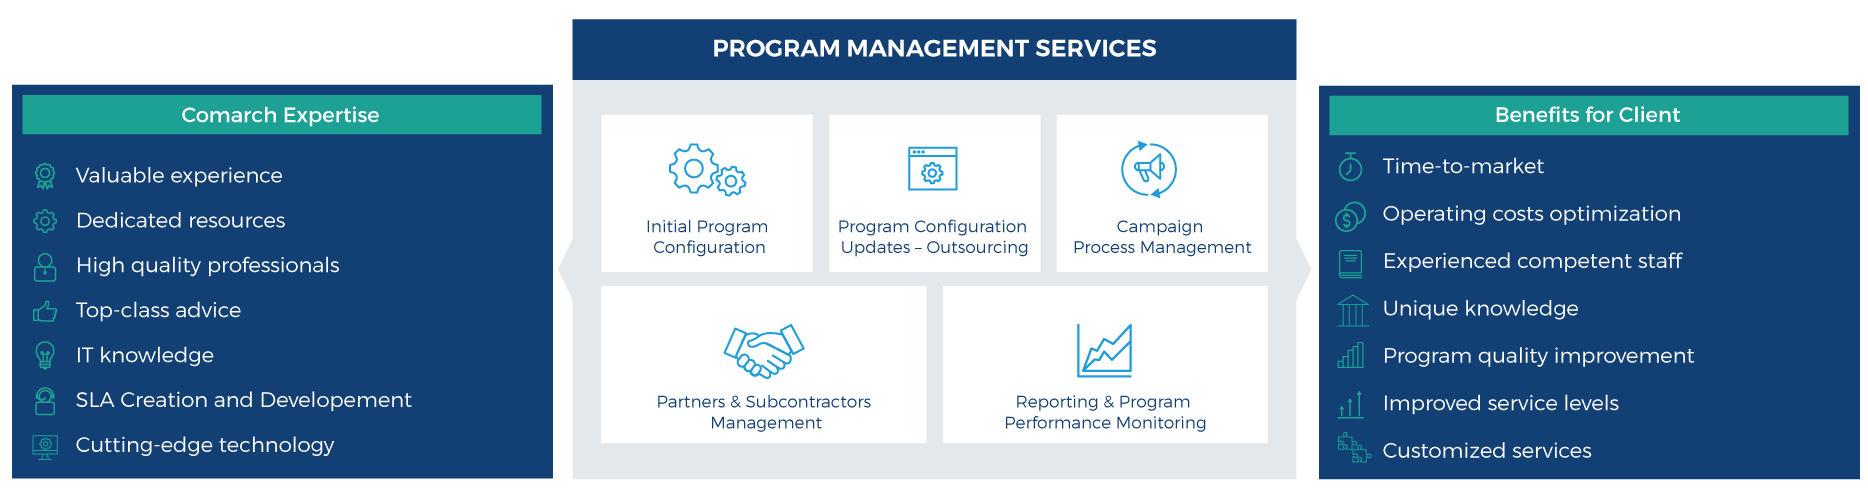 Program Management Services - infographic